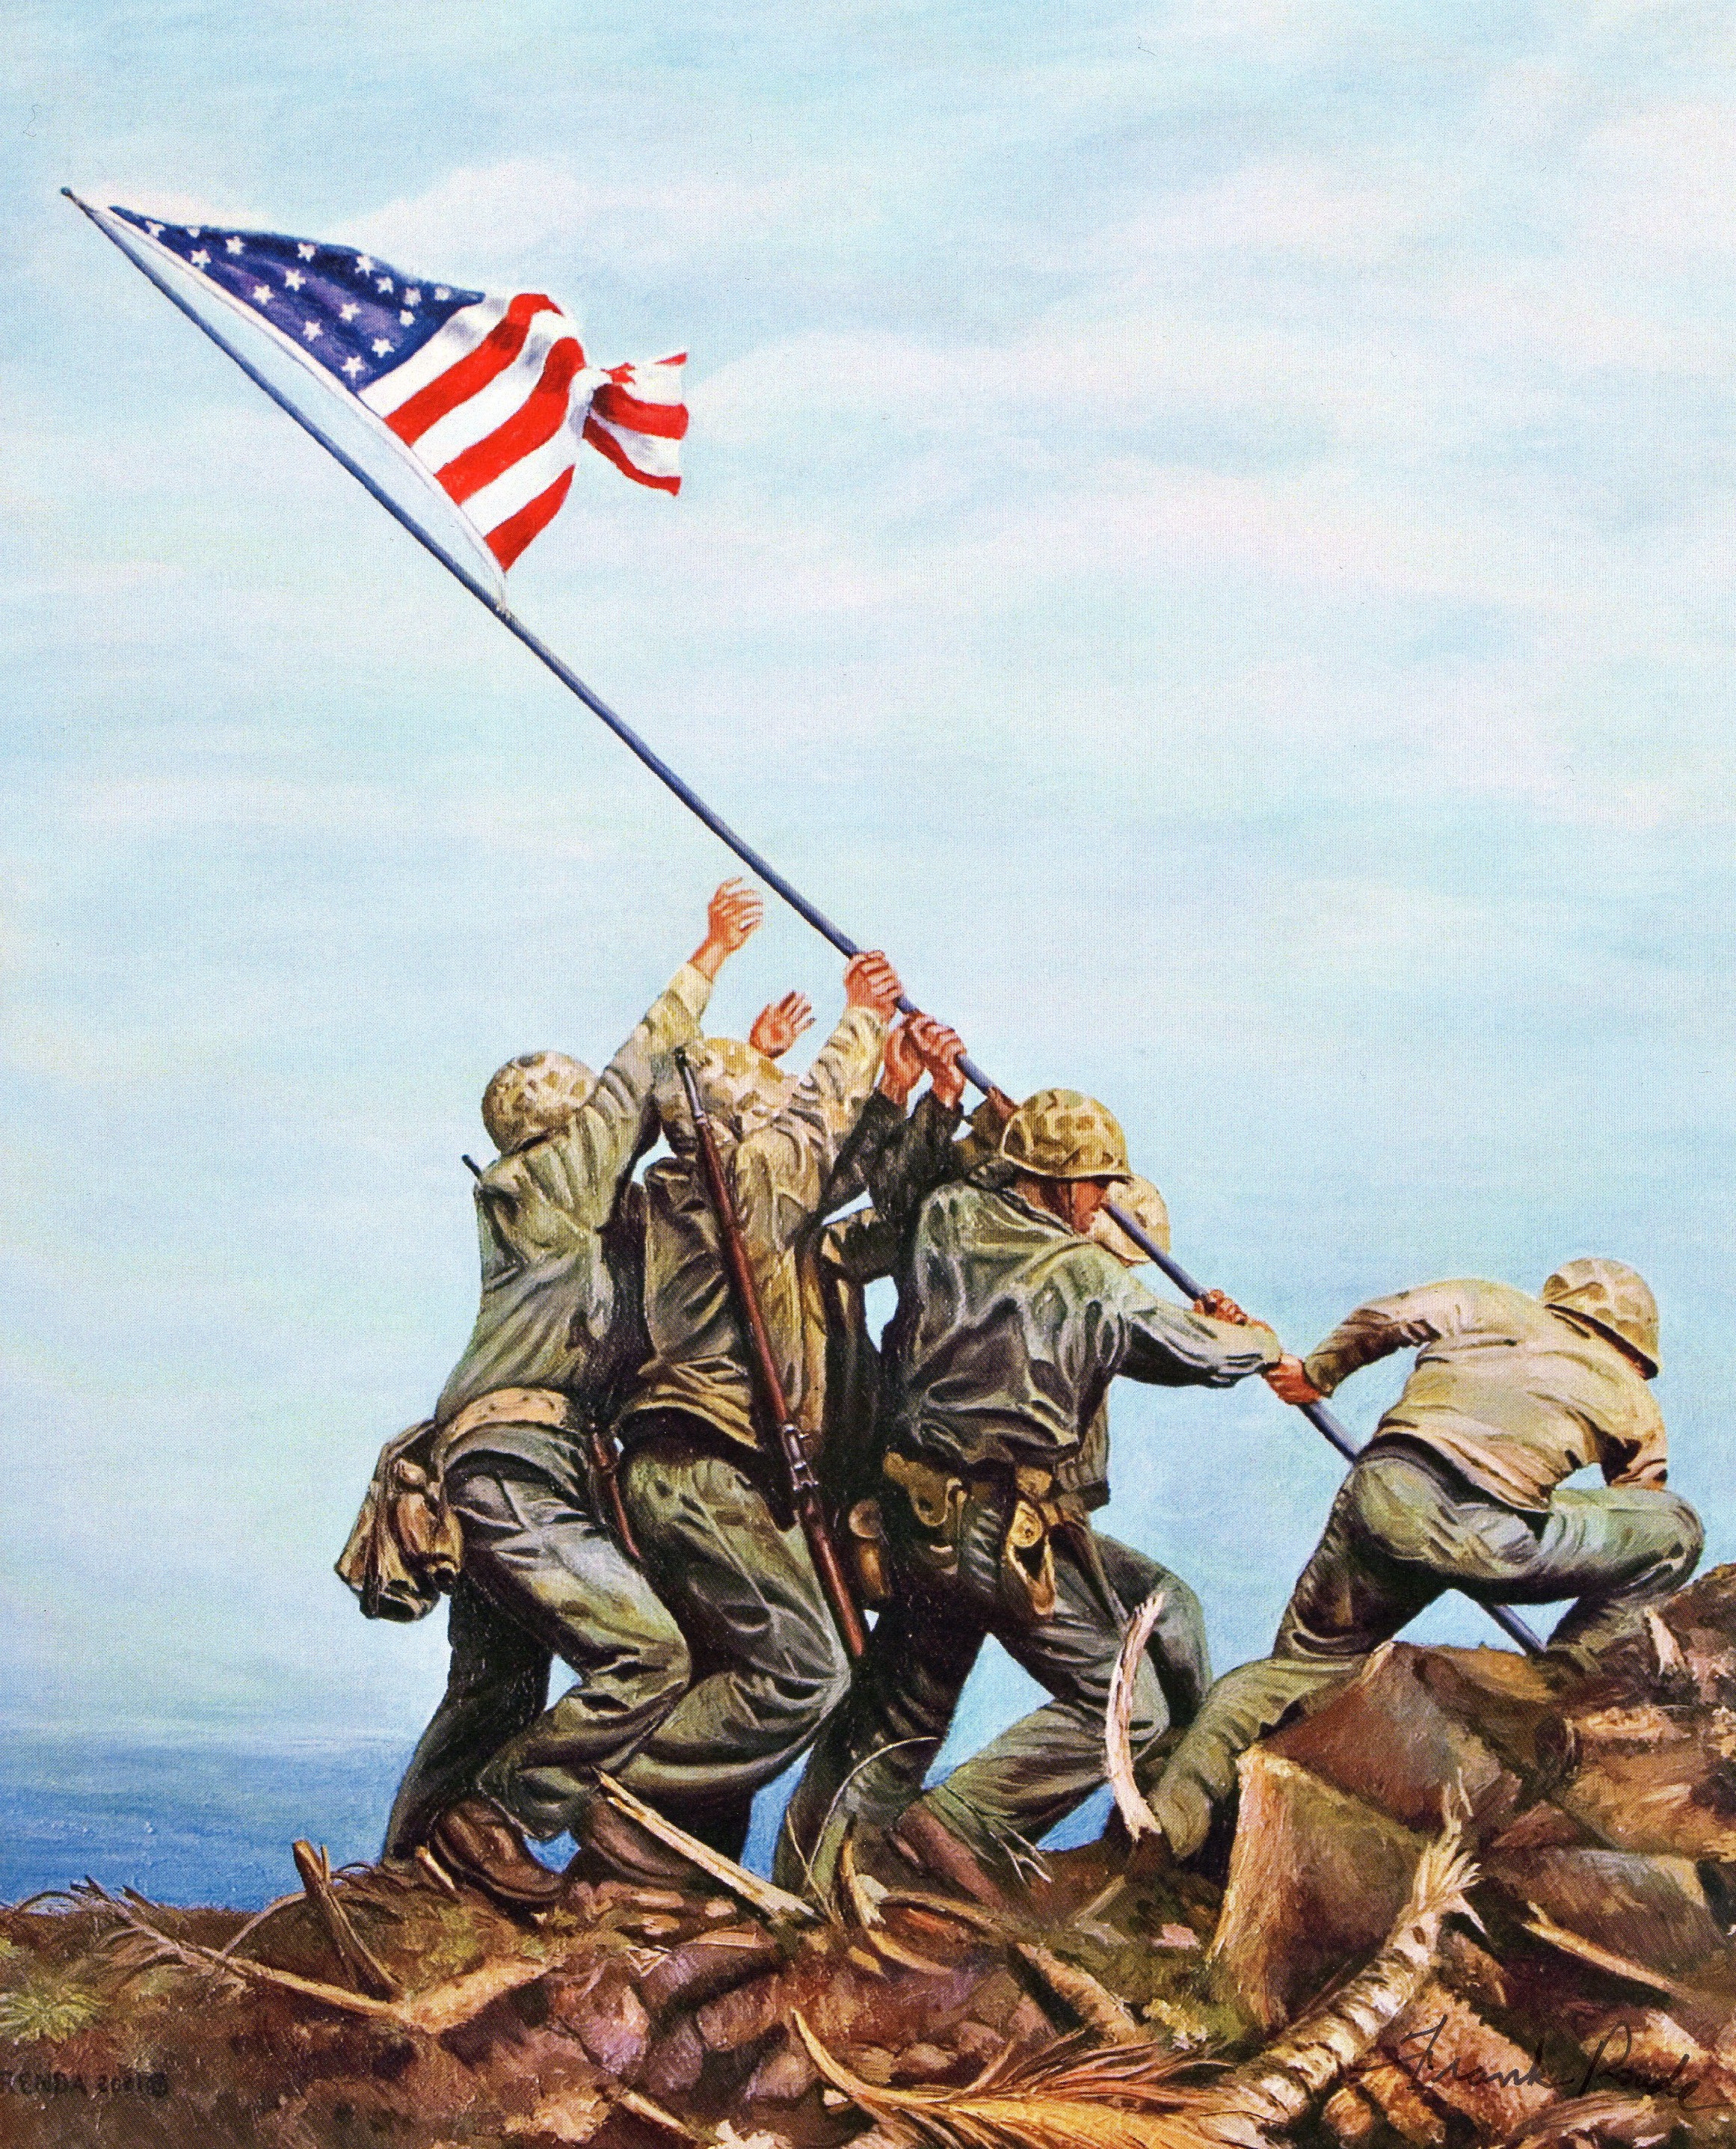 1920x1080px Iwo Jima 231.97 KB 26.03.2015 By Vanilla